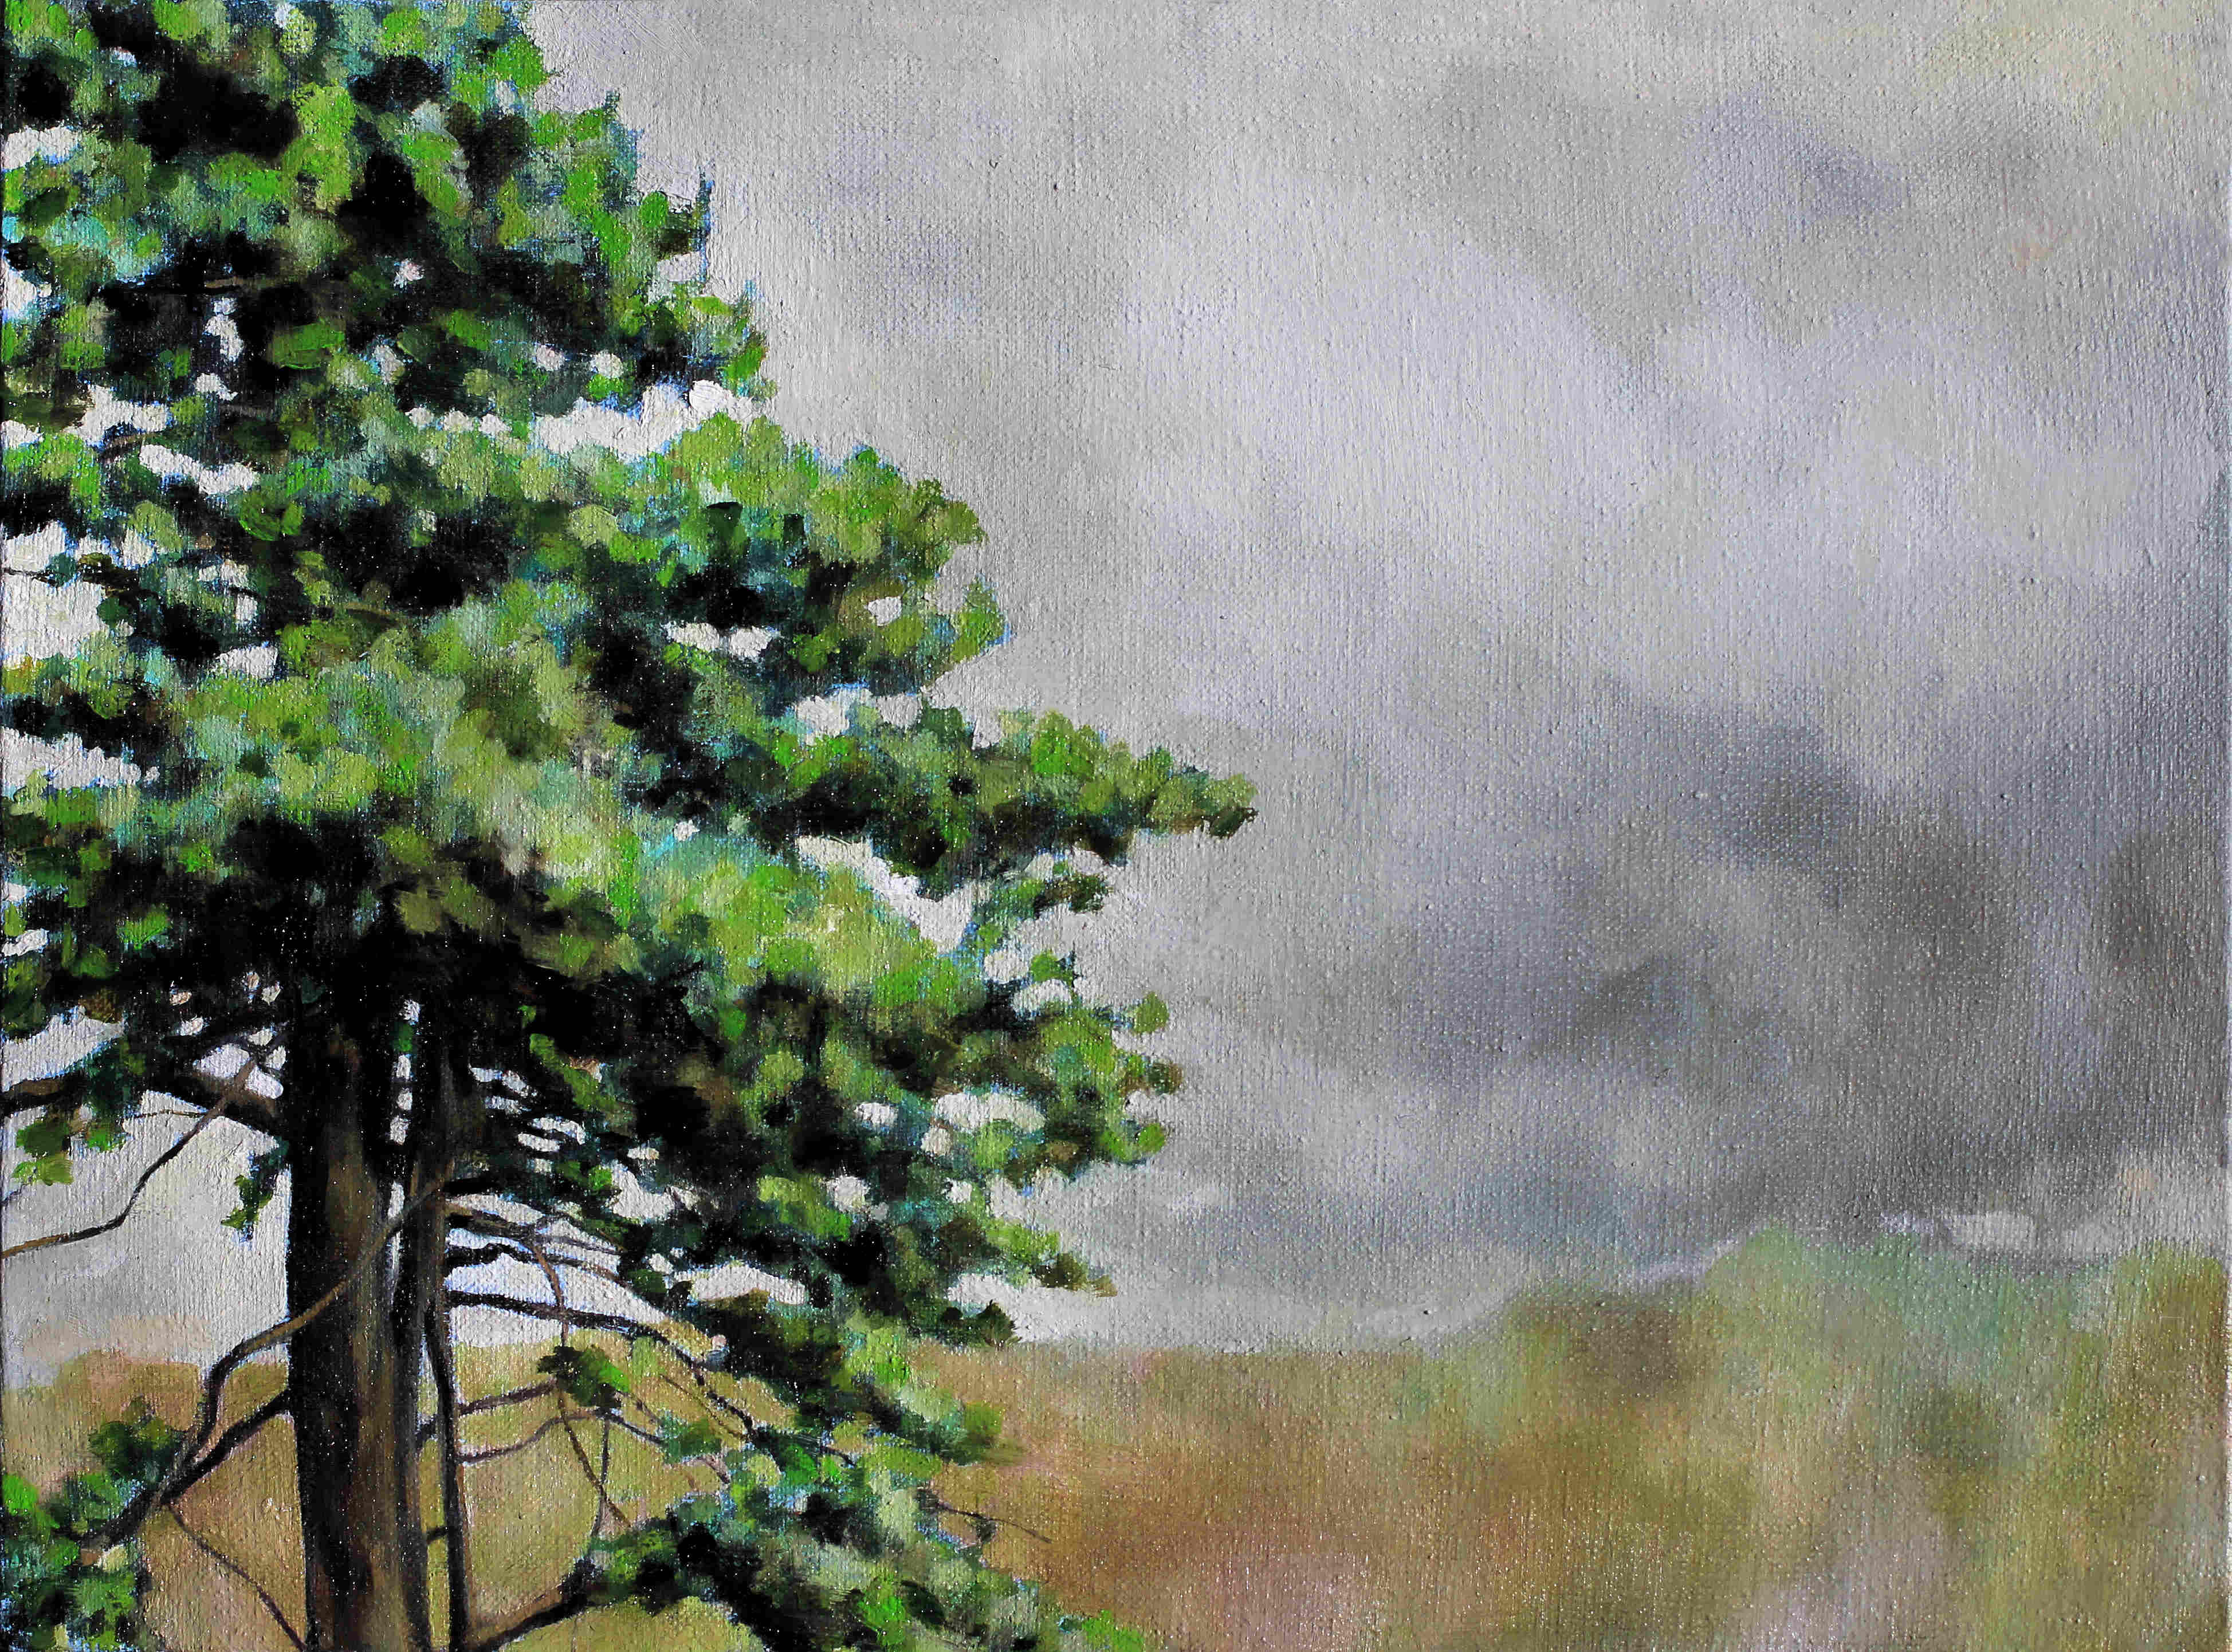 'Loch Fyne Pine' by artist Gavin Weir